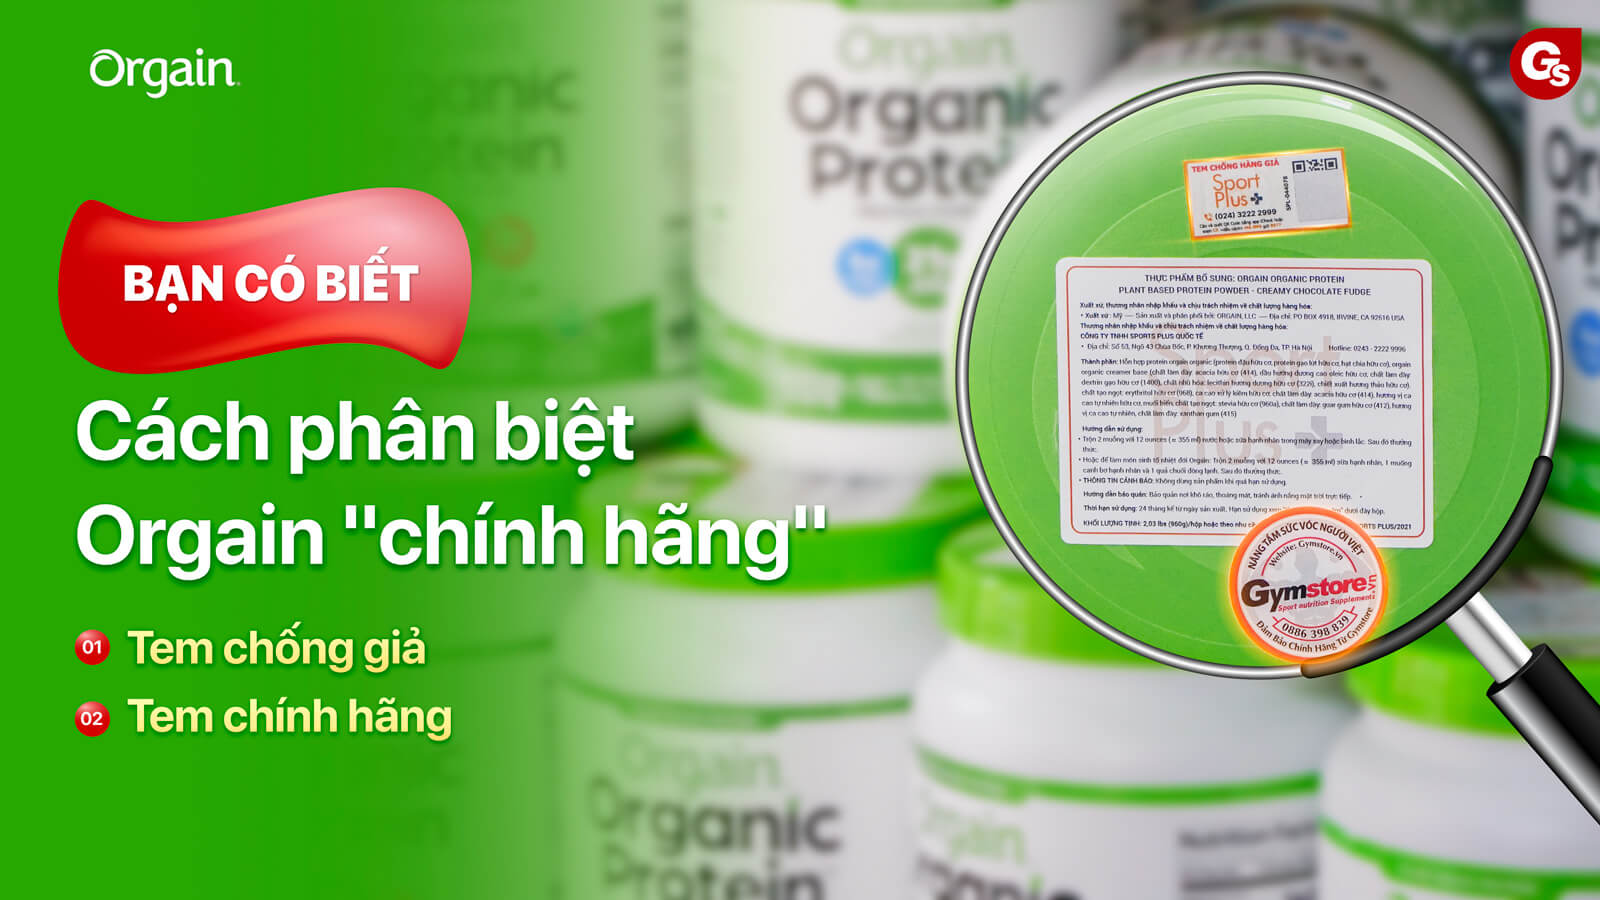 cach-phan-biet-hang-orgain-chuan-chinh-hang-100%